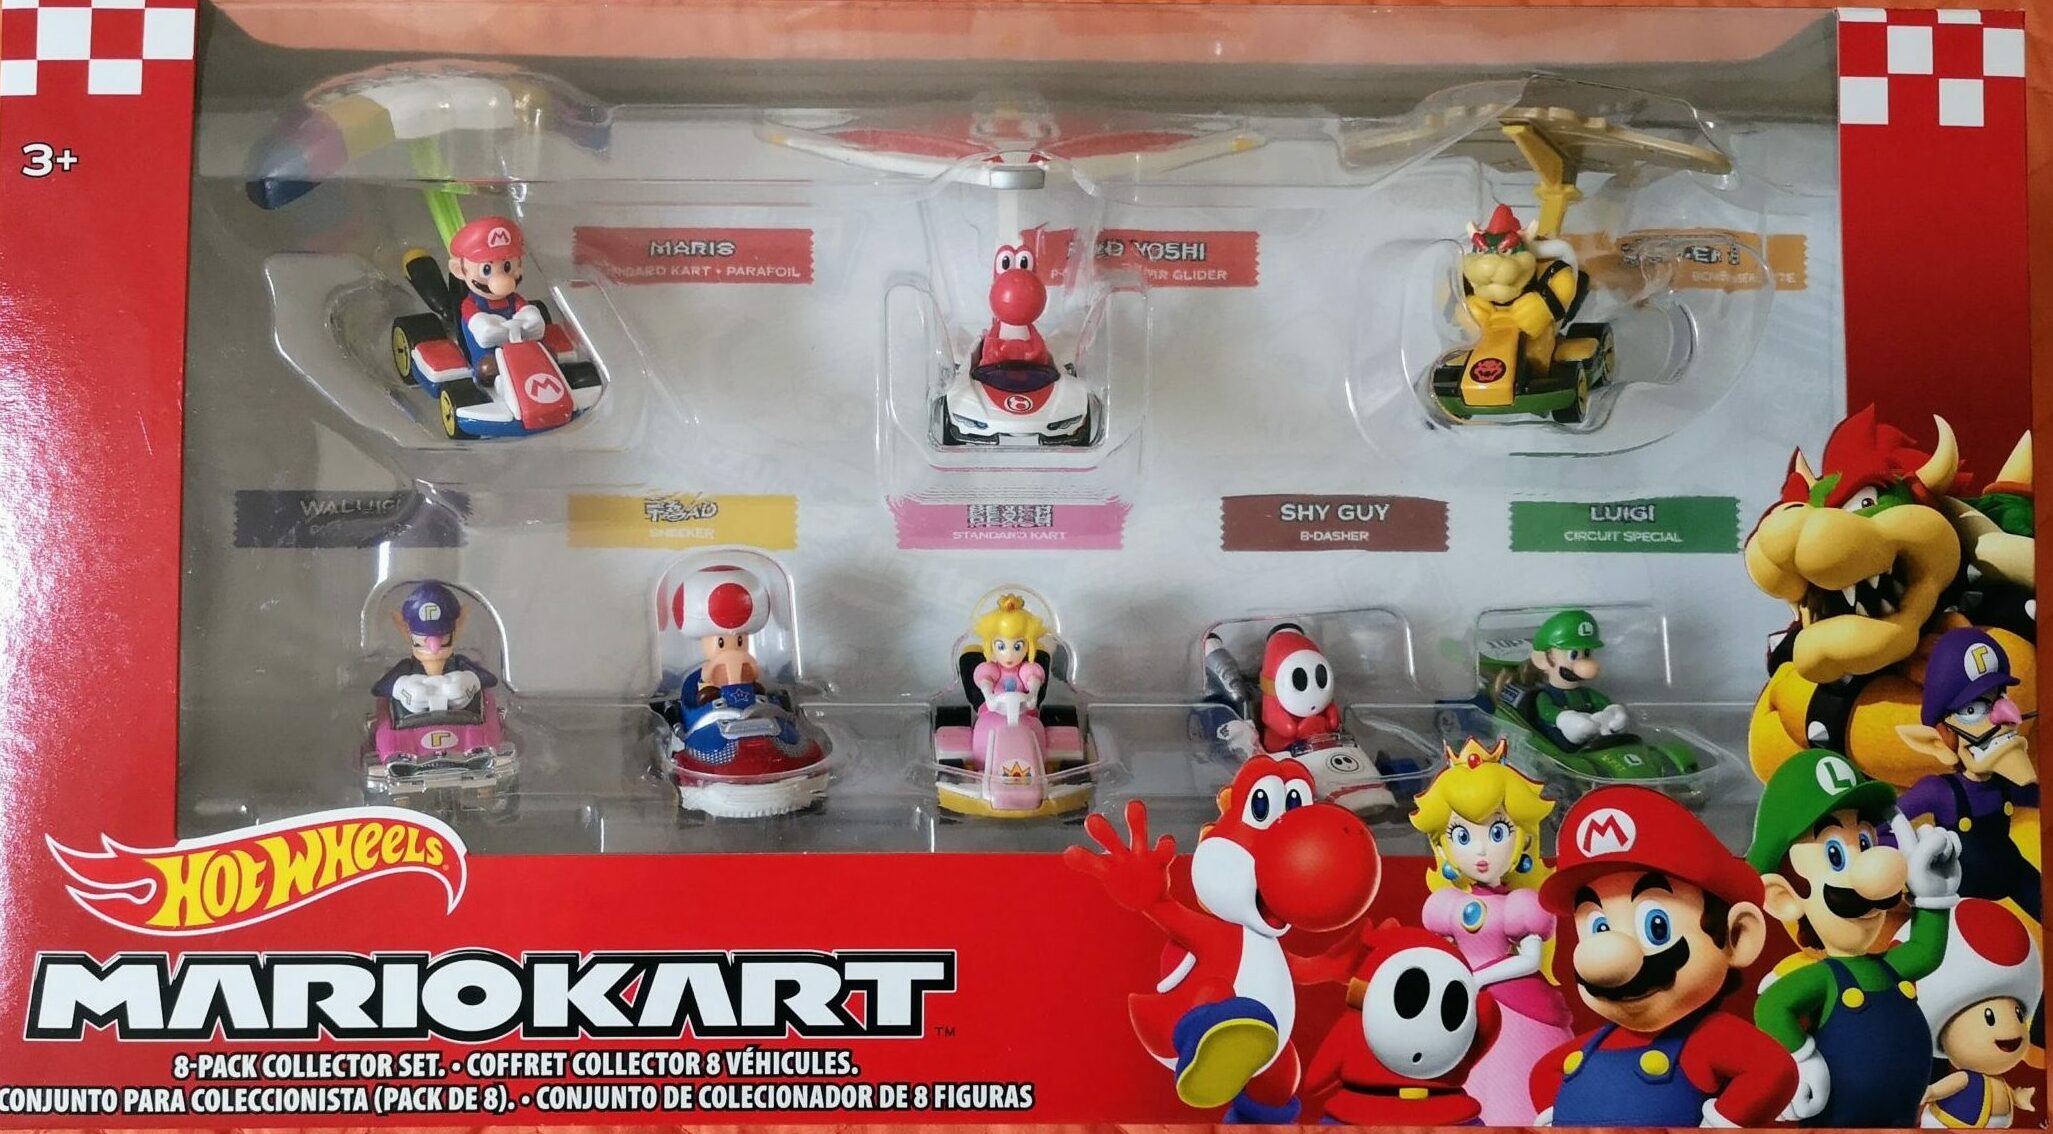 MarioKart 8-Pack Collector Set GXY11